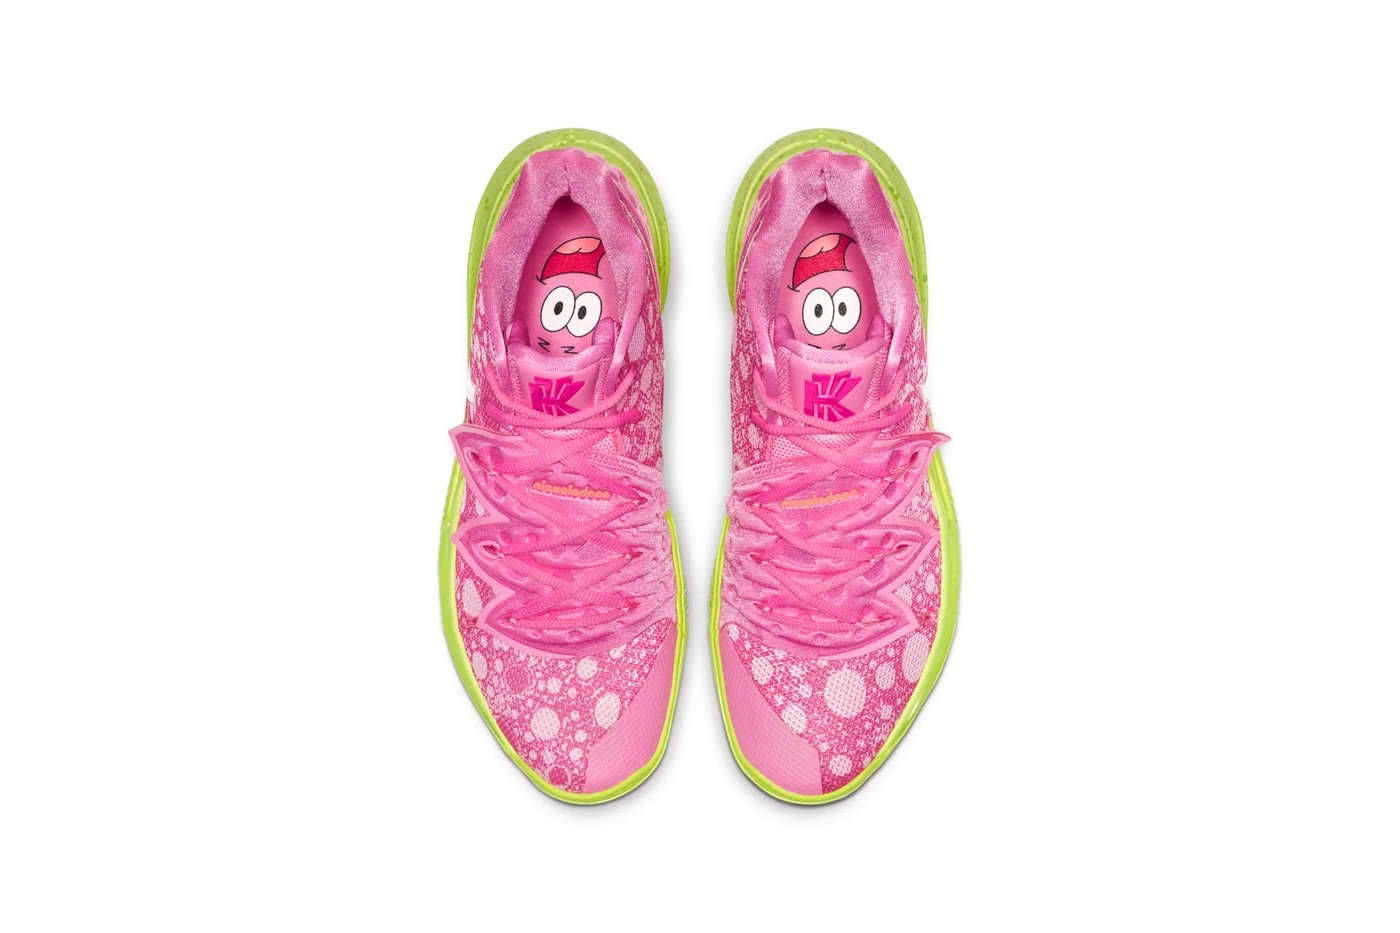 SpongeBob x Nike Kyrie New Sneakers 